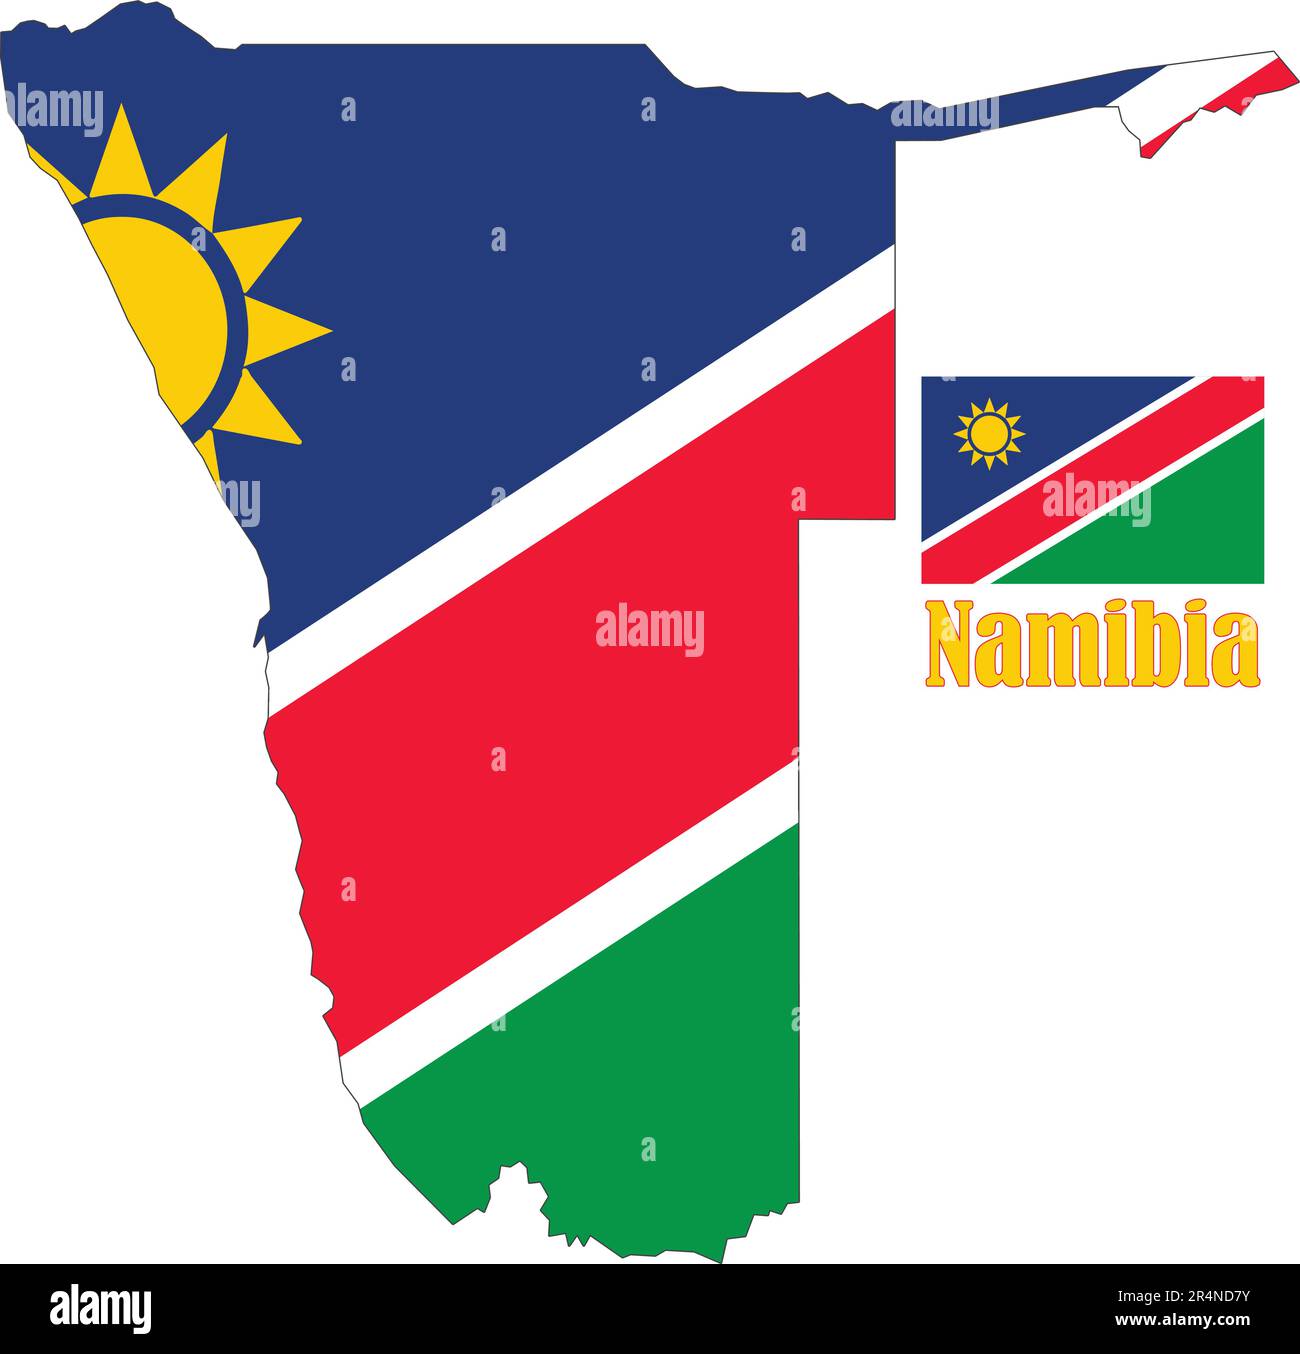 Namibia-Karte und -Flagge Stock Vektor